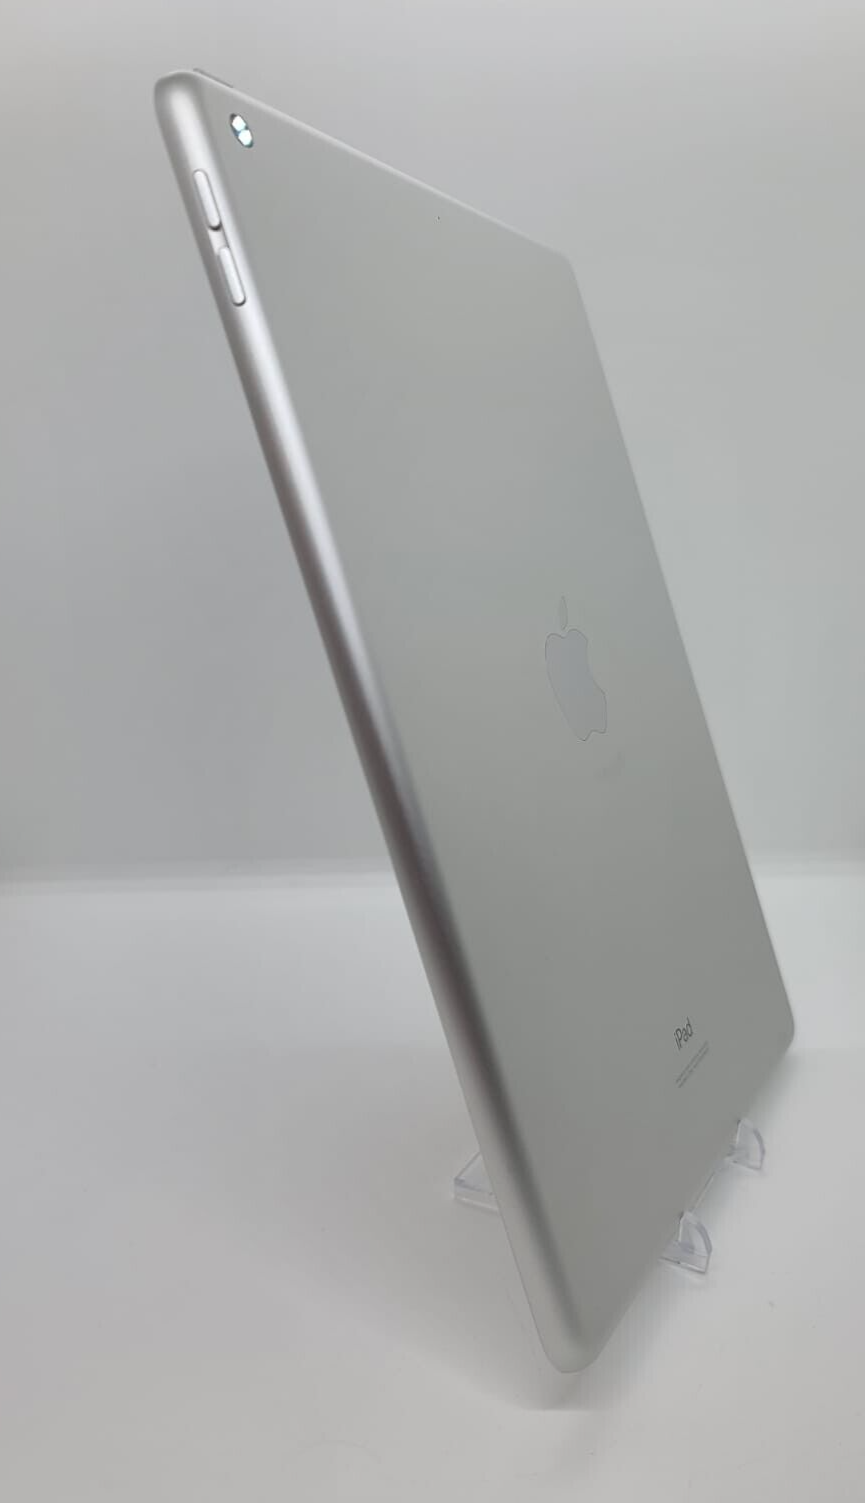 Apple iPad (7th Generation) White 10.2" Wifi 128GB NOT WORKING